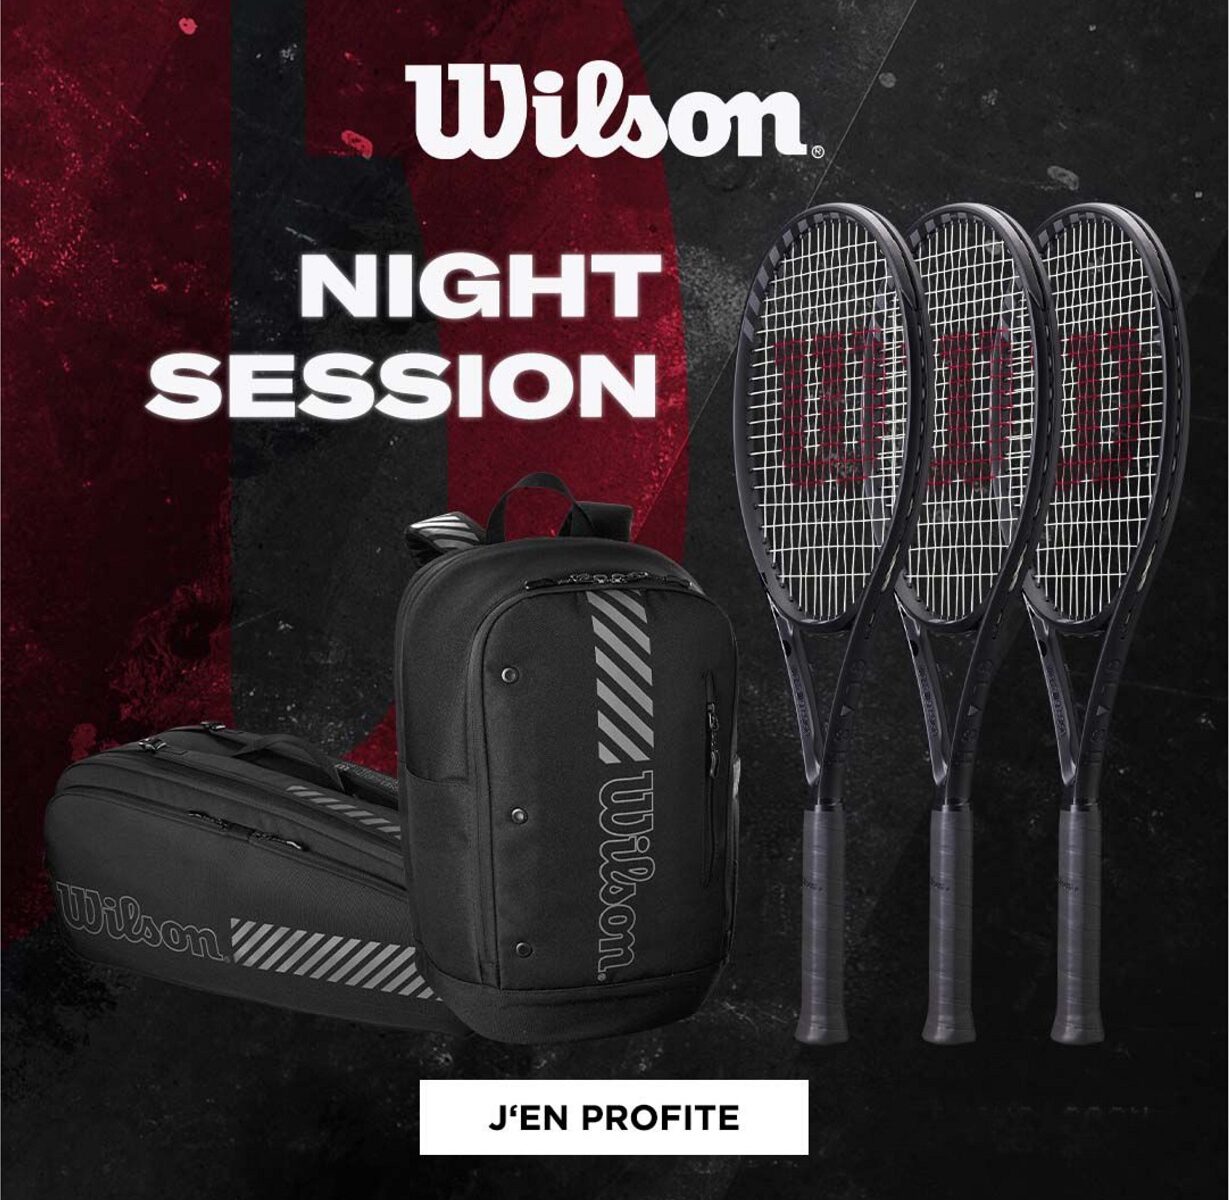 night session Wilson sur protennis